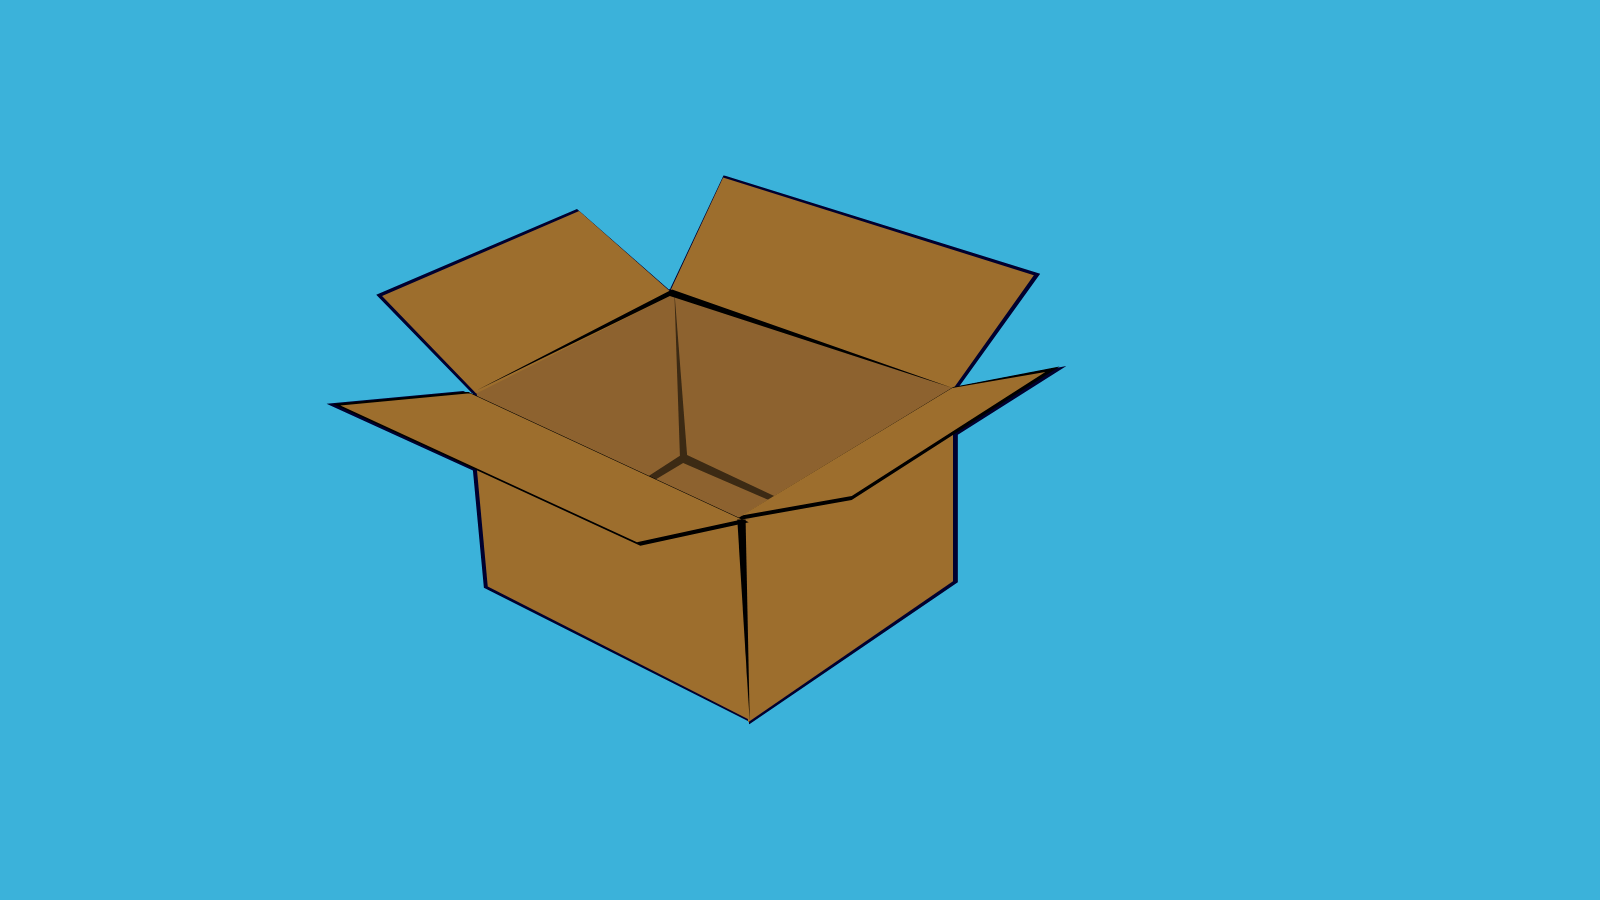 An open cardboard box